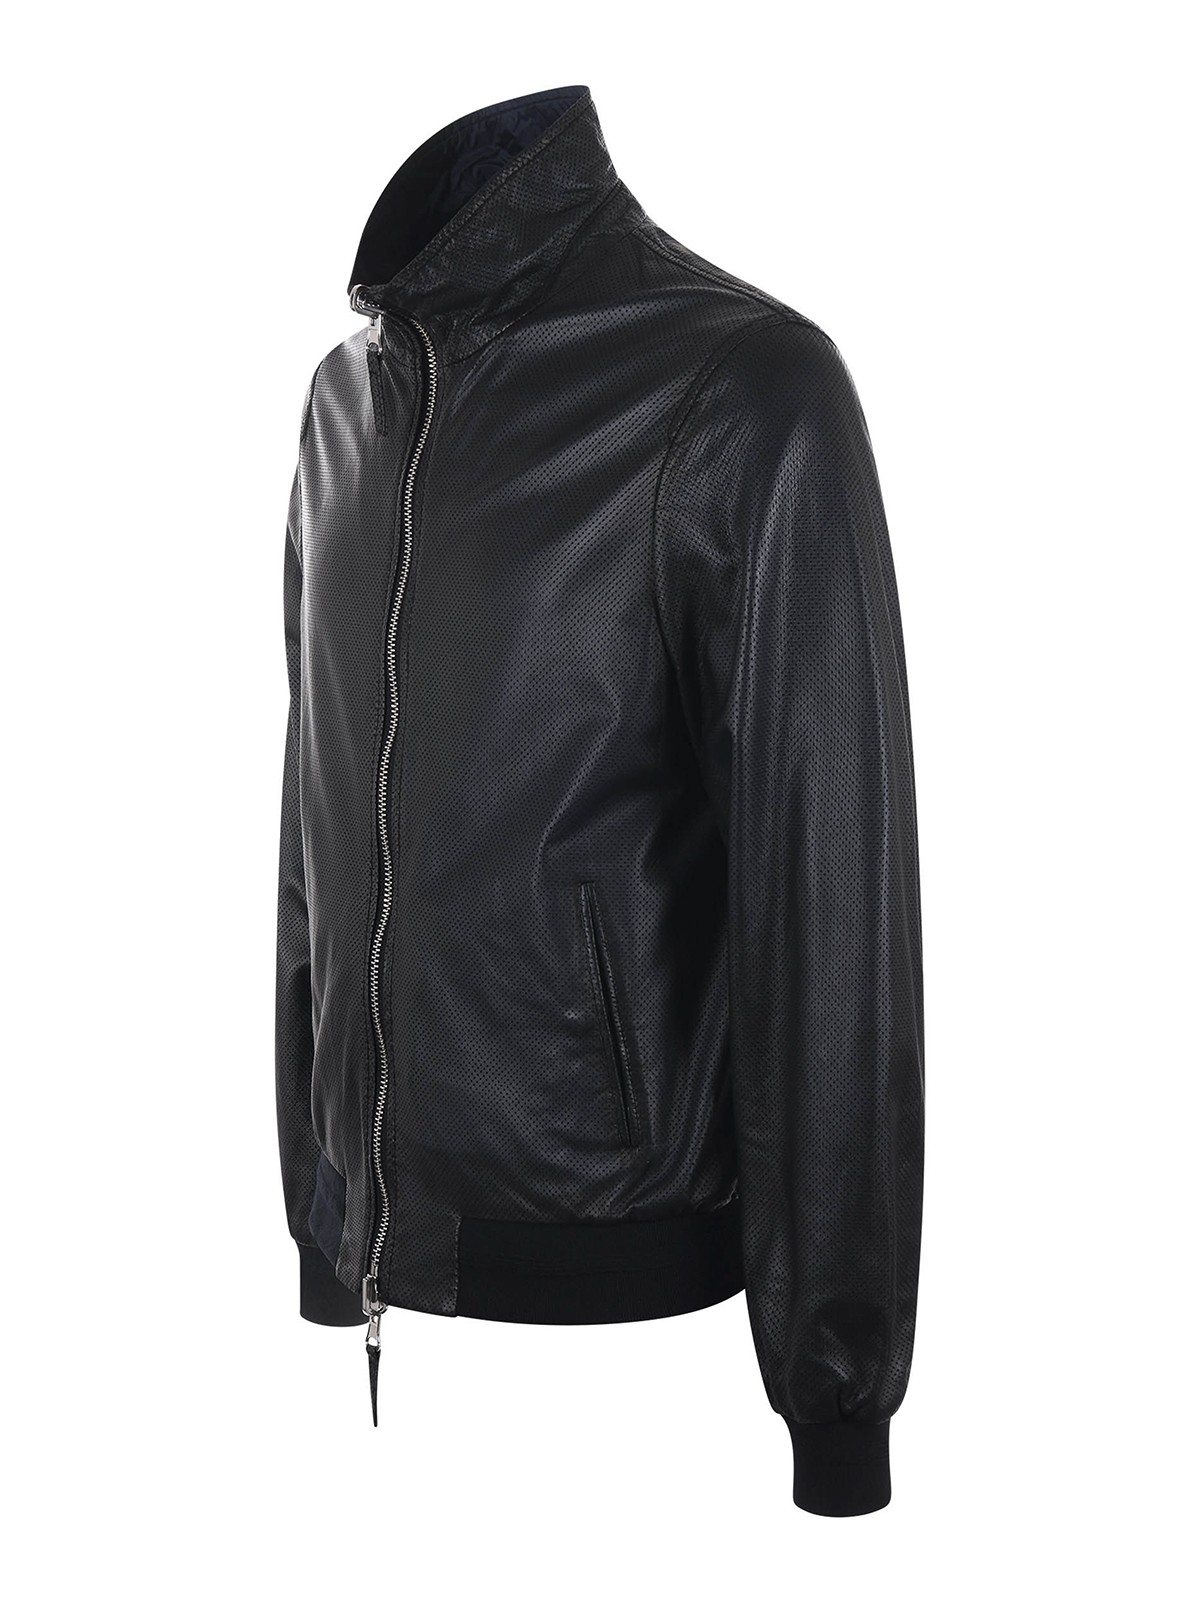 Shop The Jack Leathers Reversible Jacket In Black